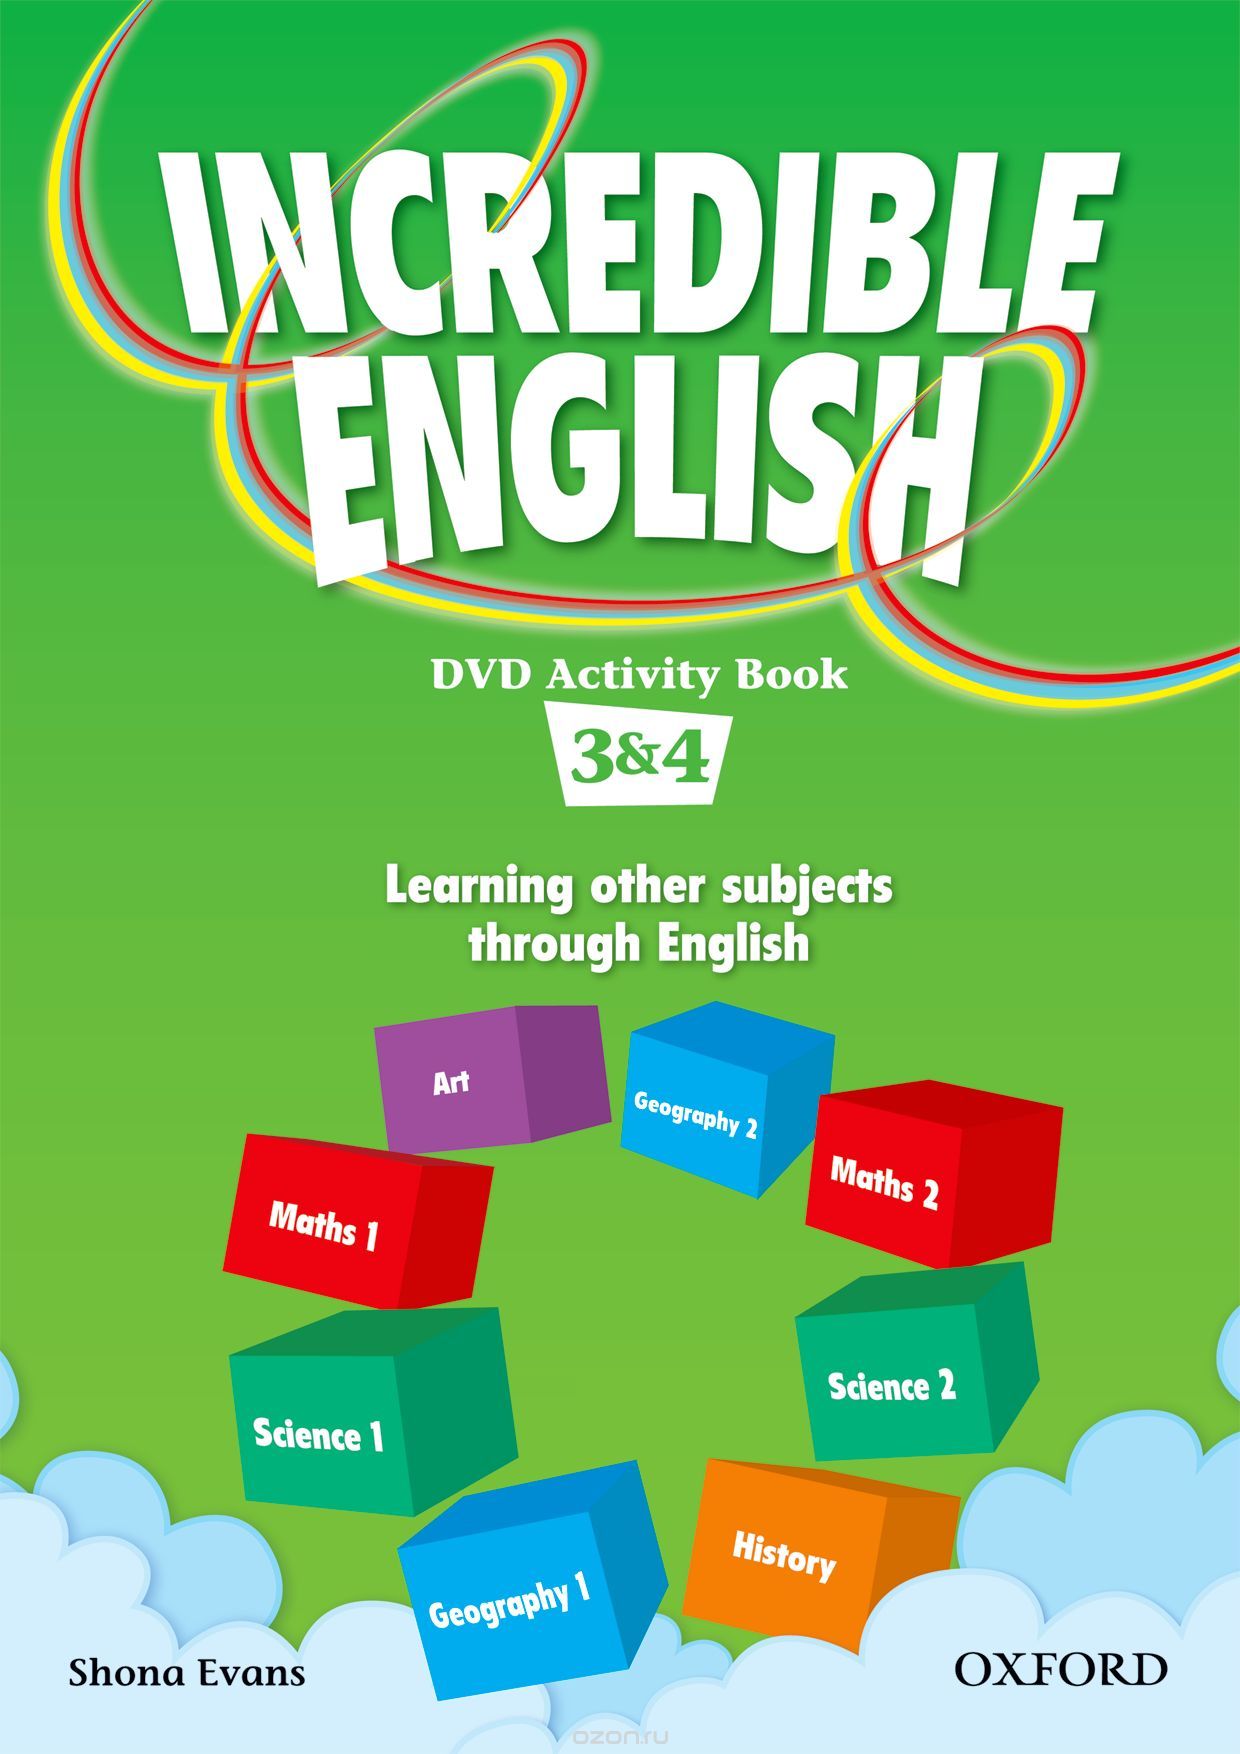 Скачать книгу "INCREDIBLE ENGLISHLISH 3&4 DVD AB"